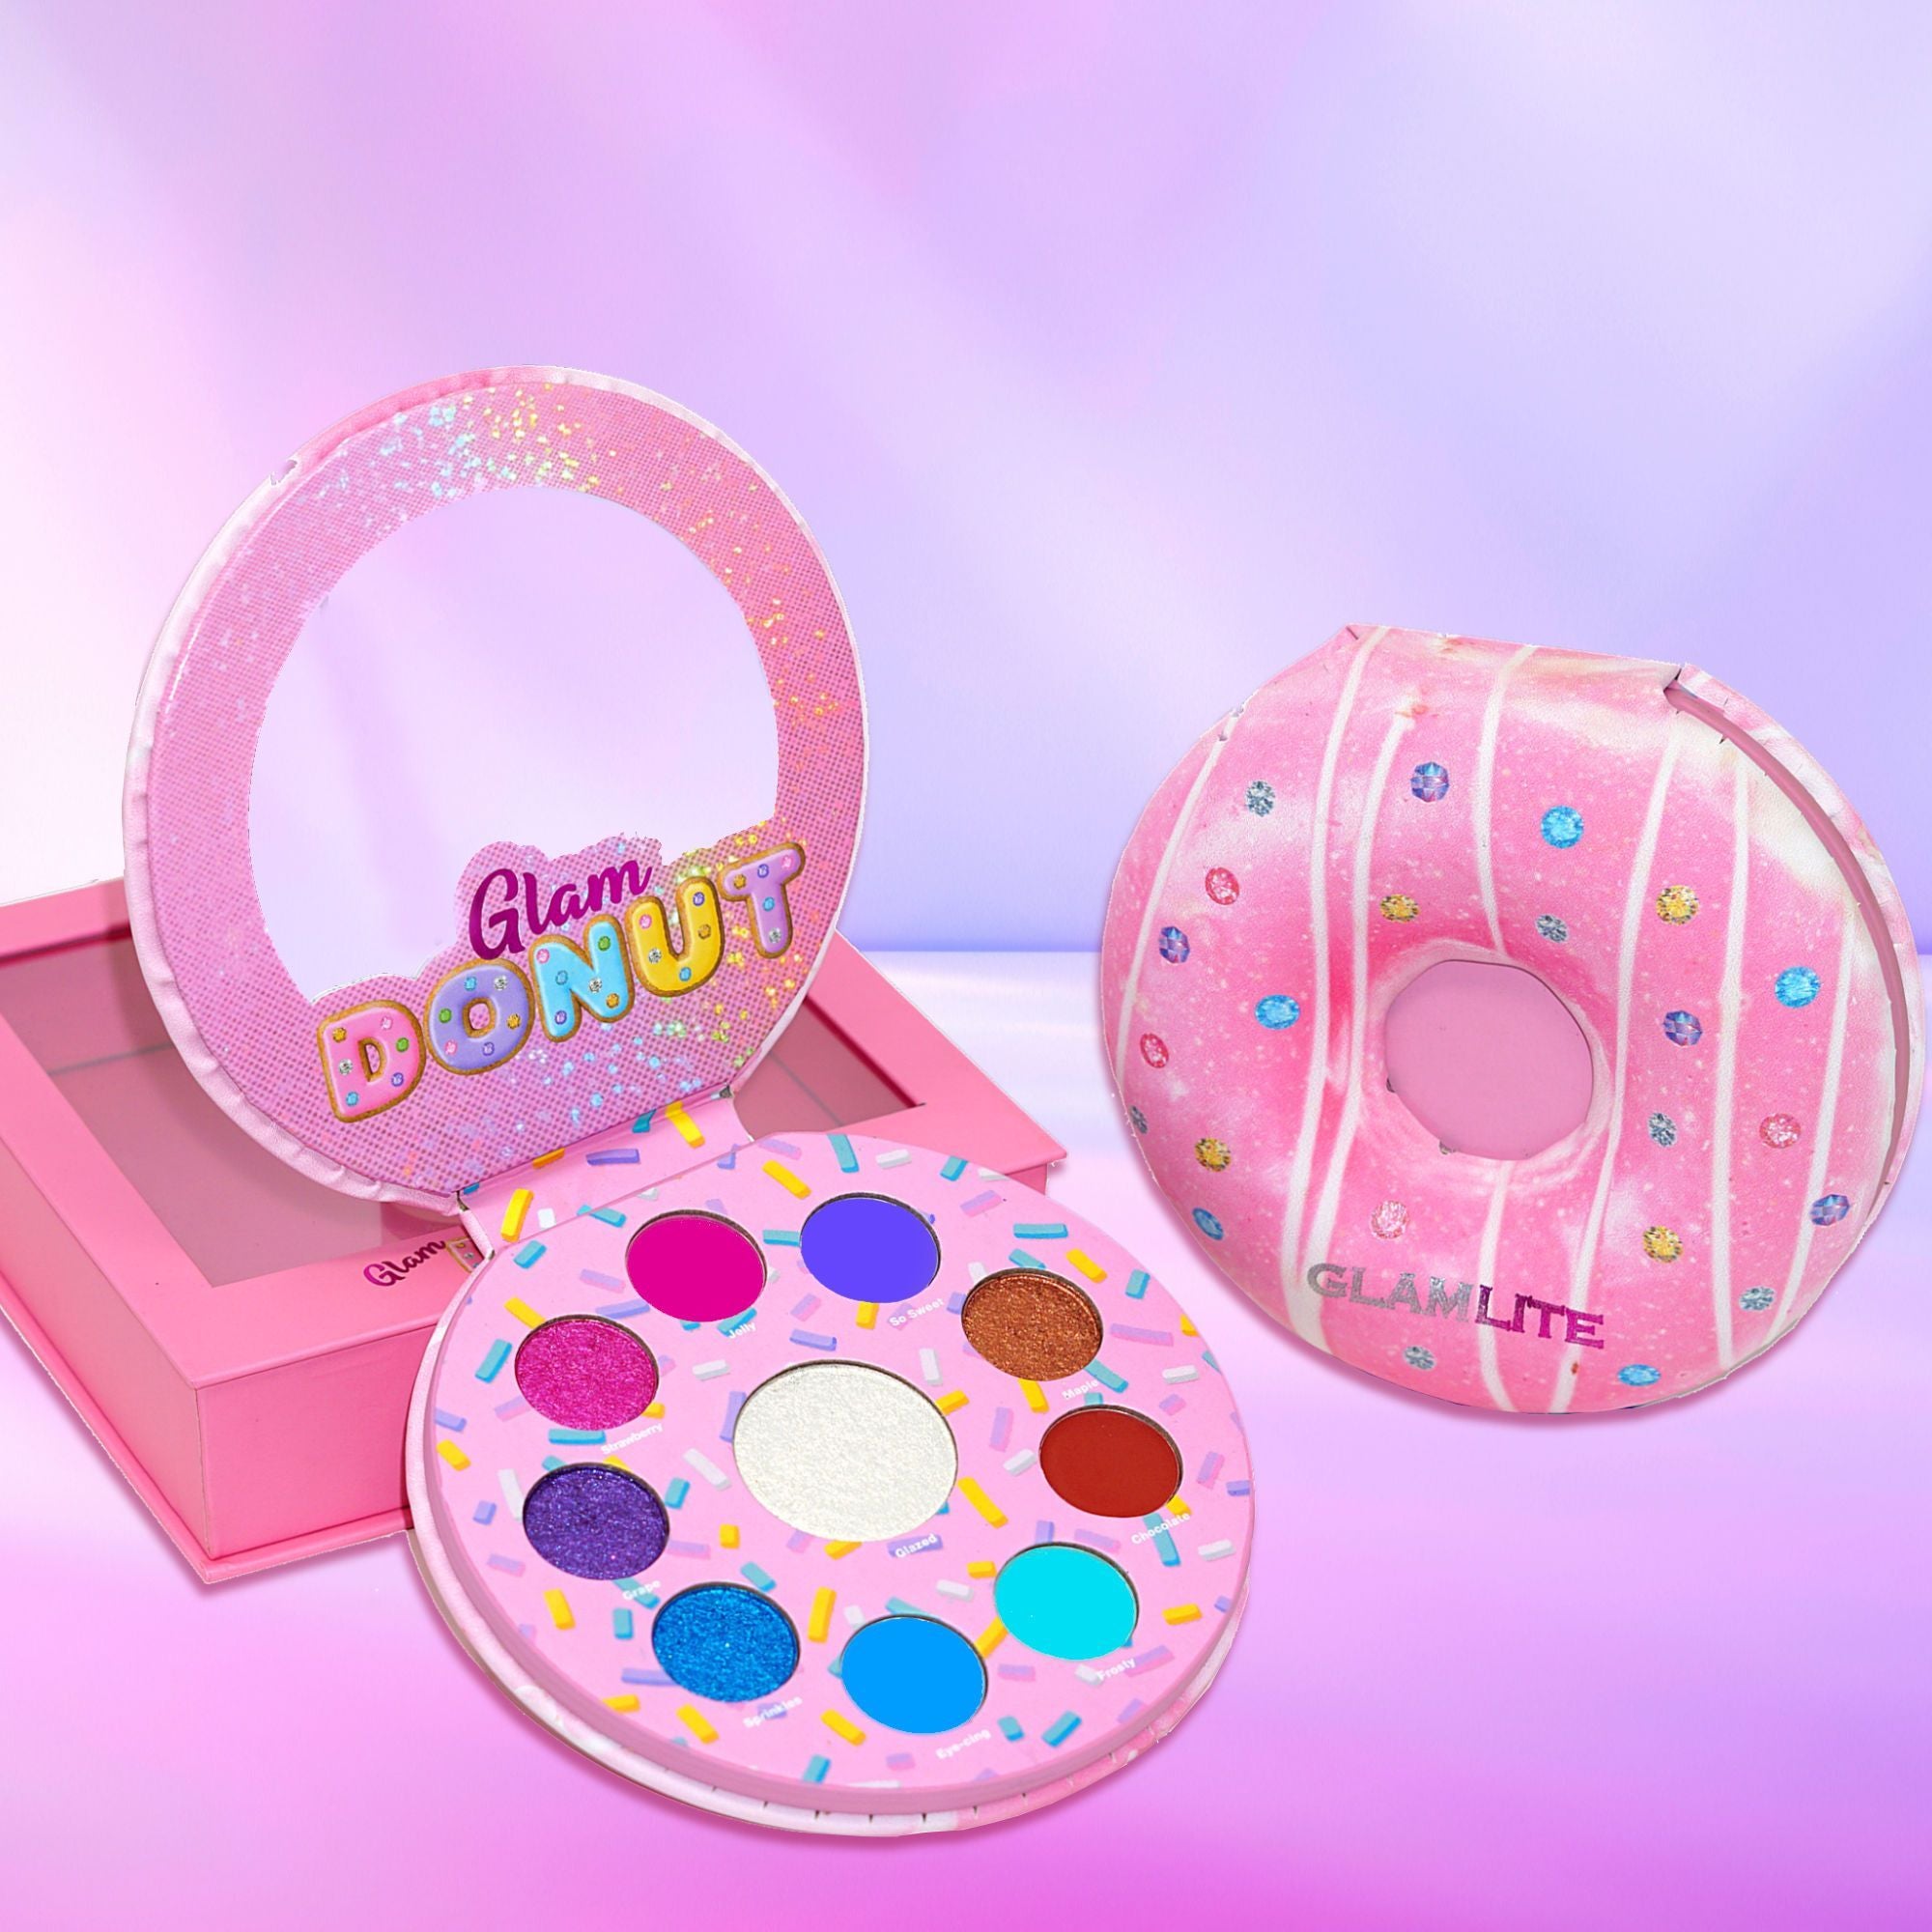 Glamlite Cosmetics - Glam Donut Palette